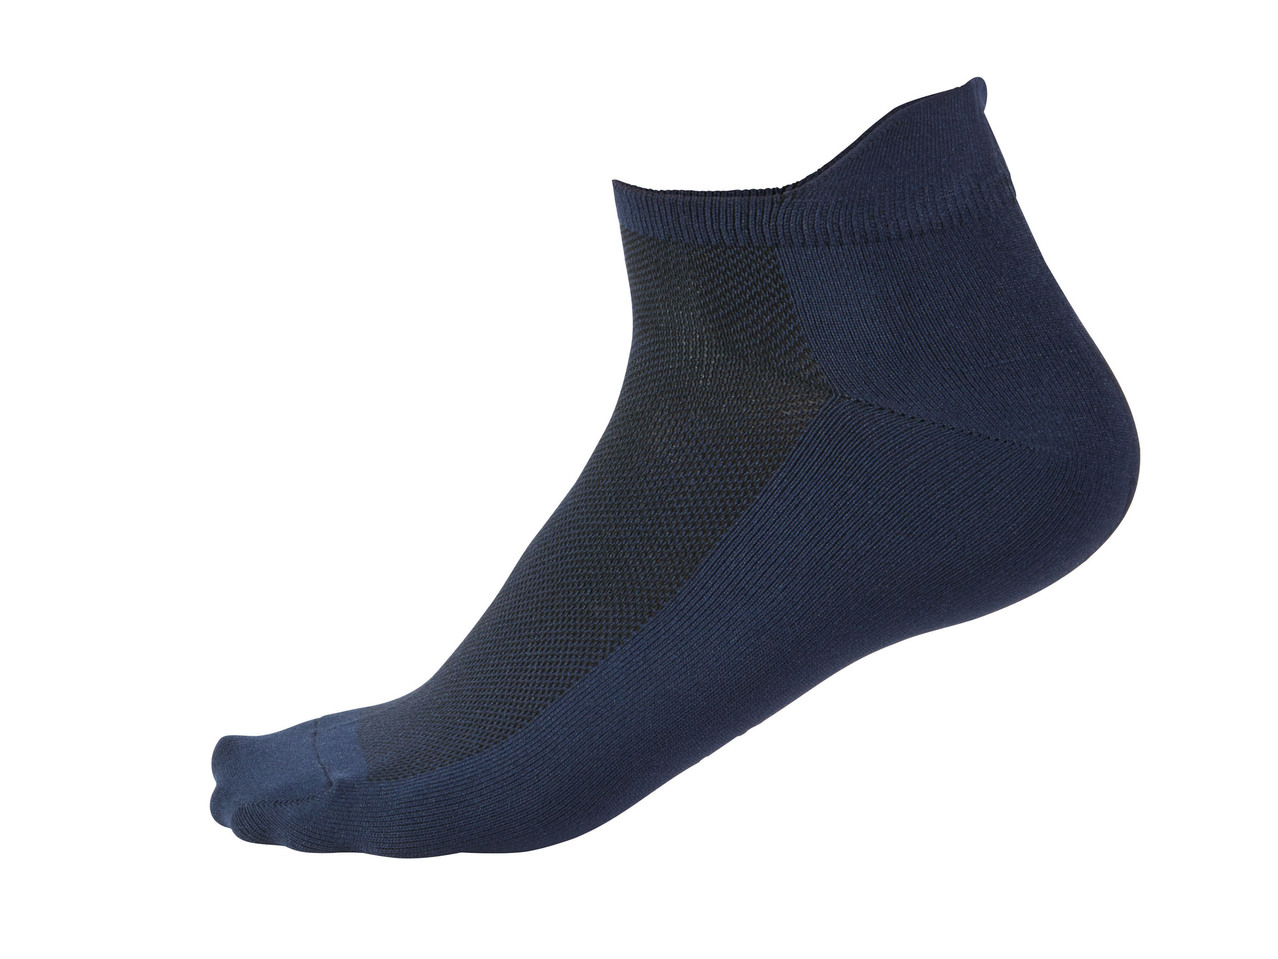 Men's Trainer Socks, 3 pairs